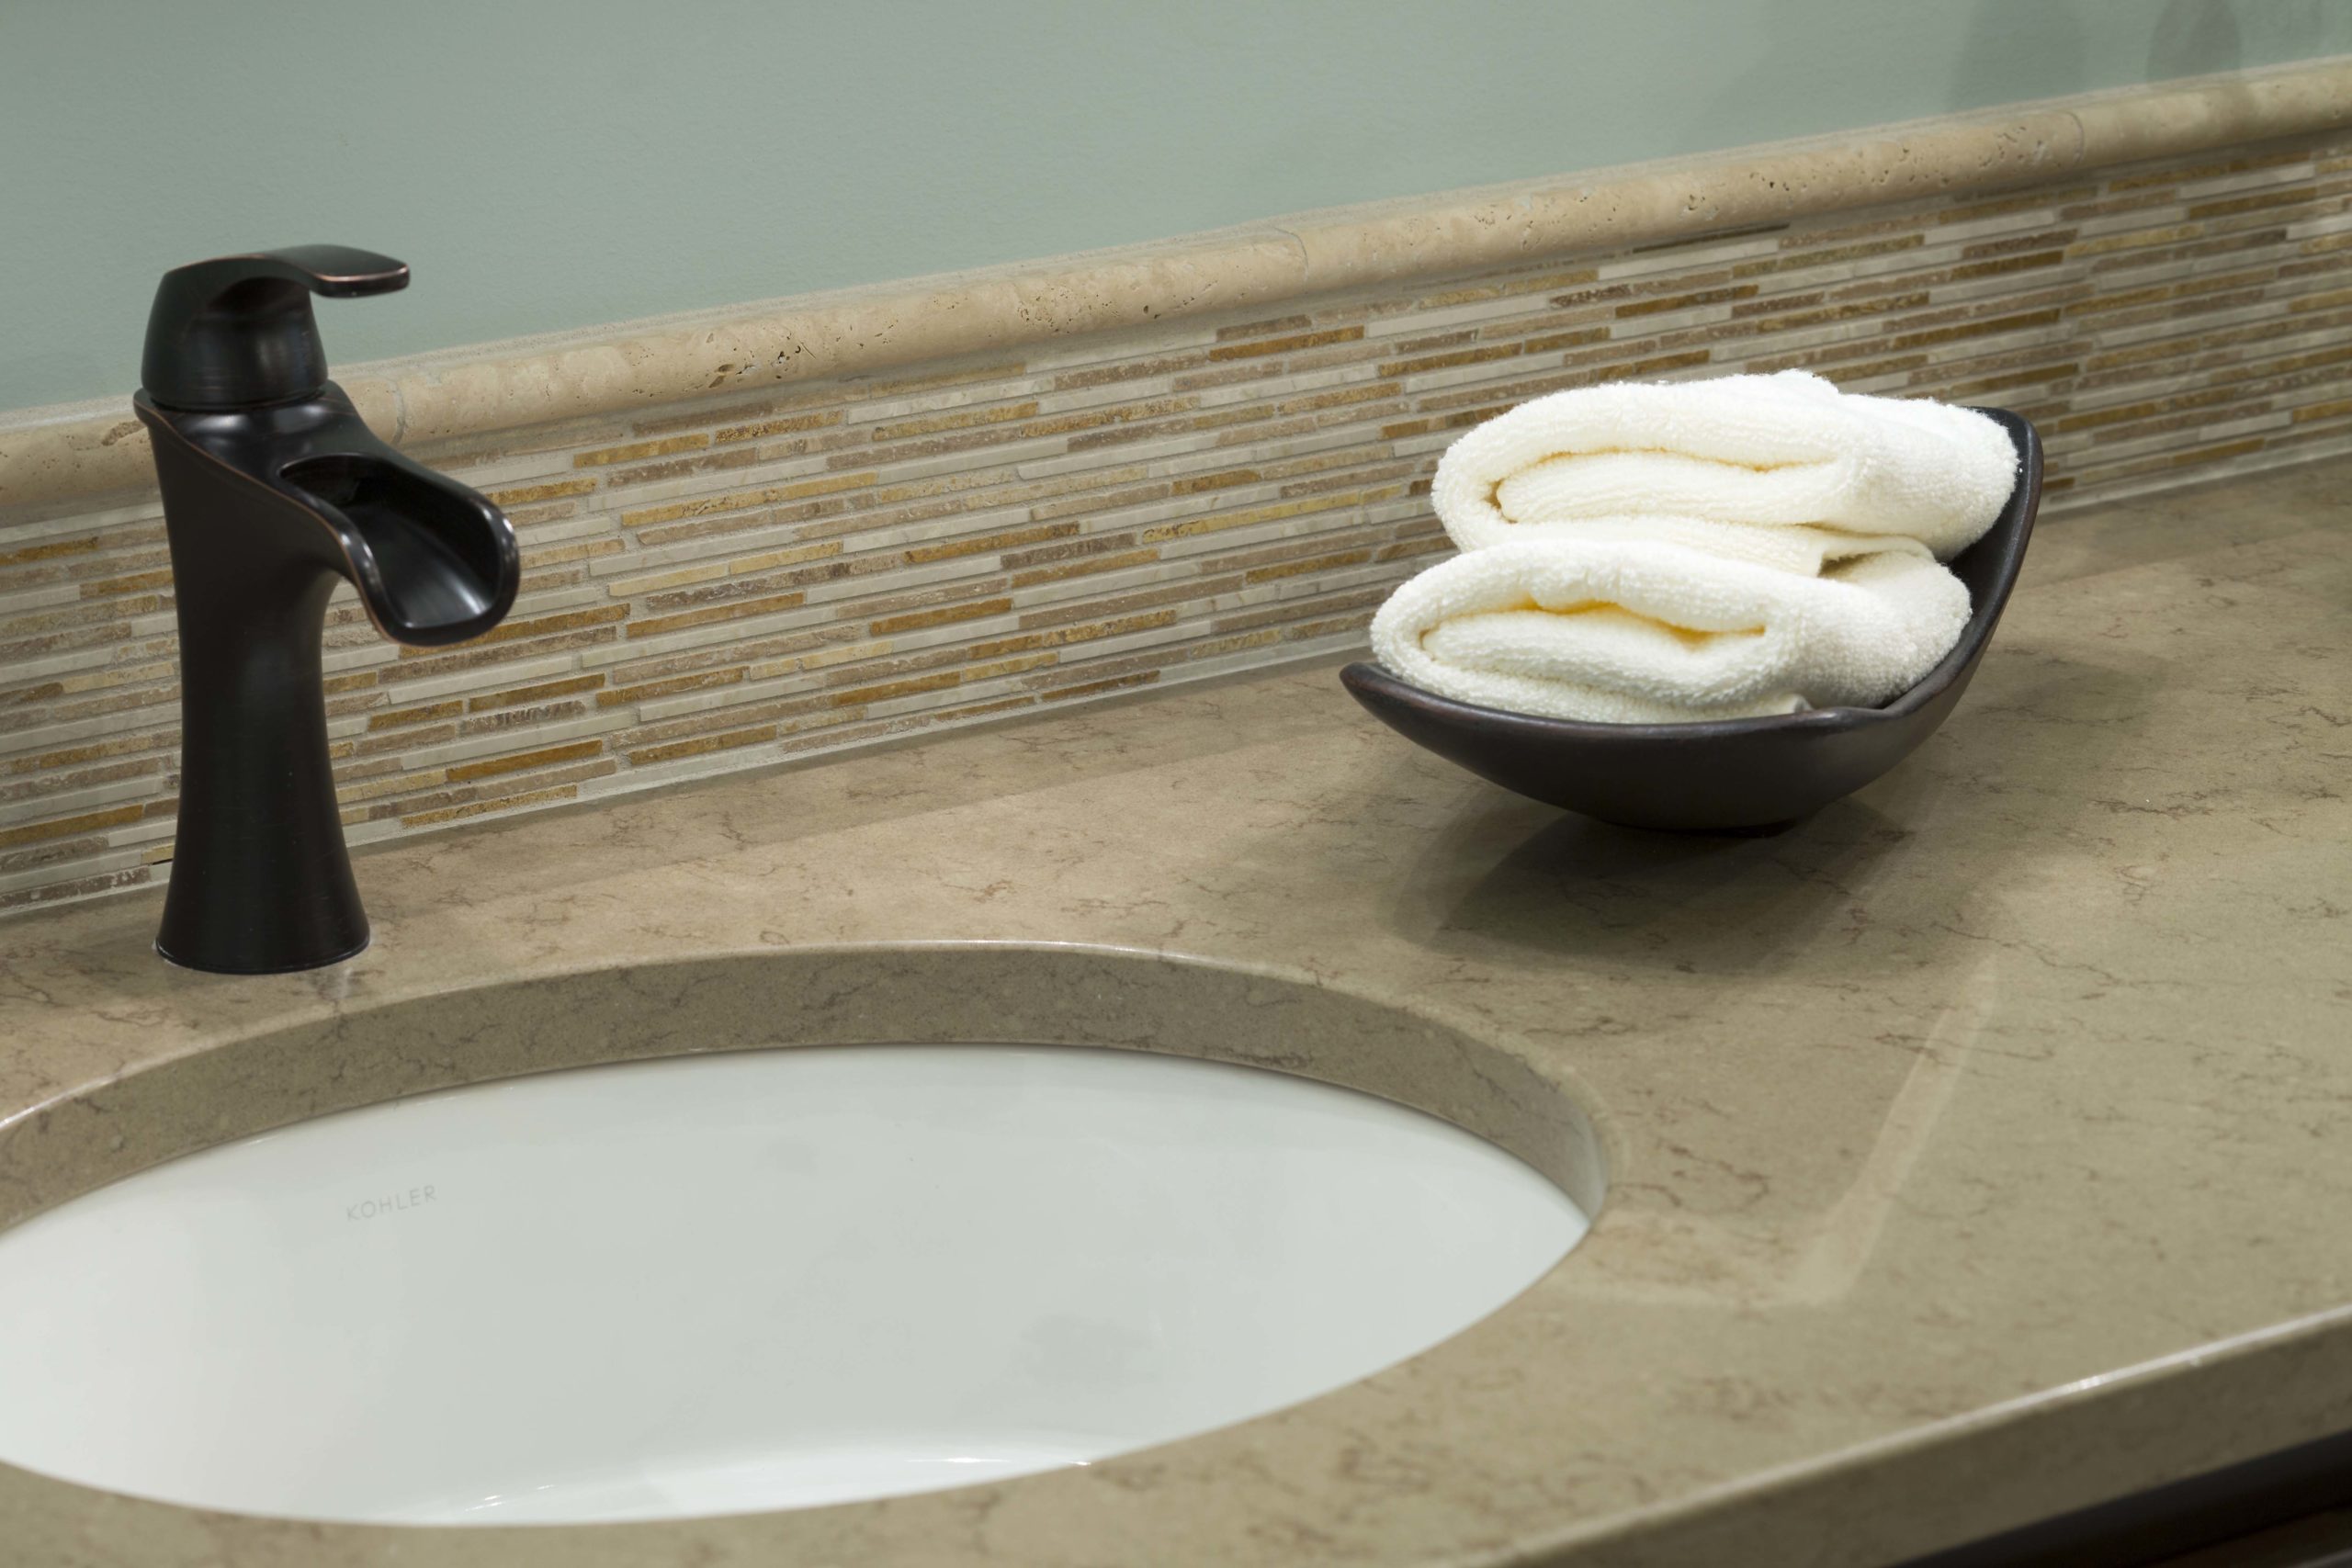 A sink in a bathroom undergoing an Edina remodel.